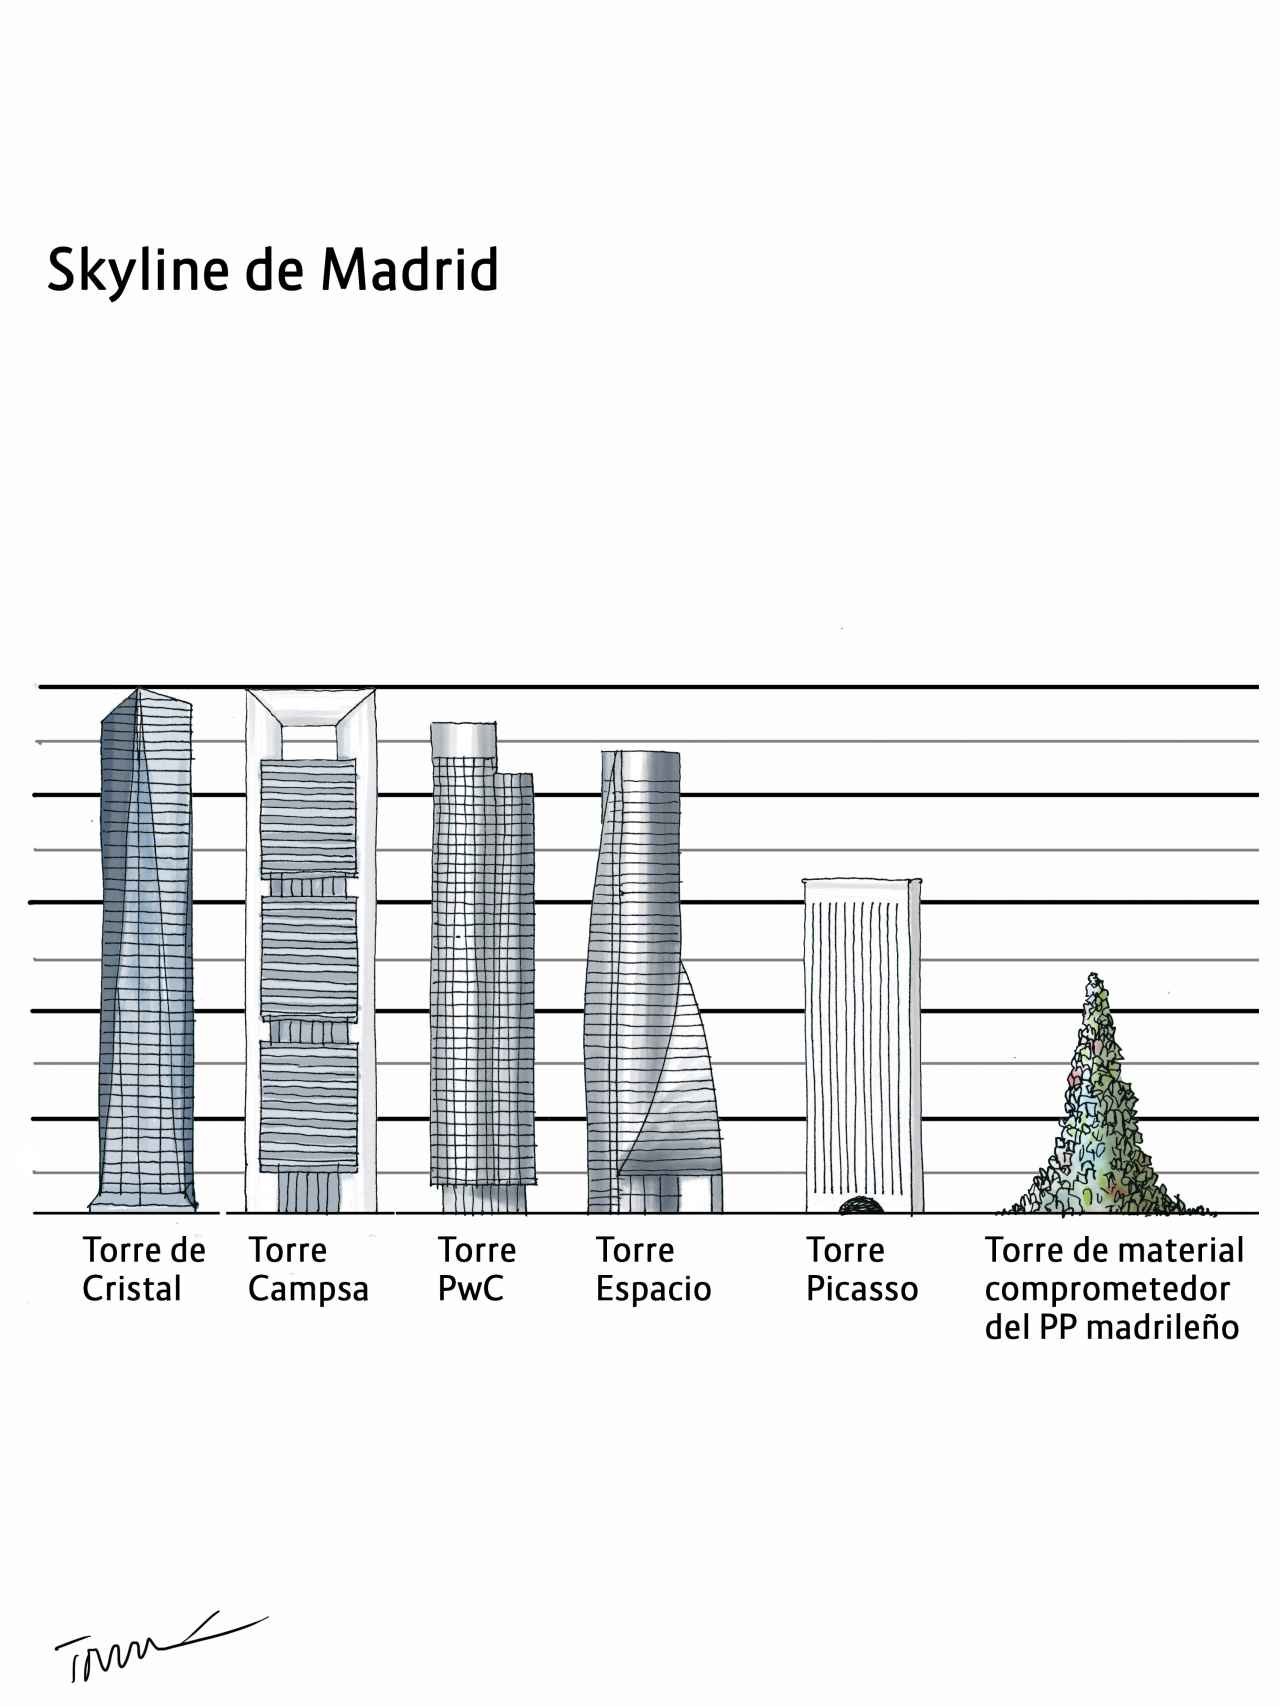 El skyline madrileño